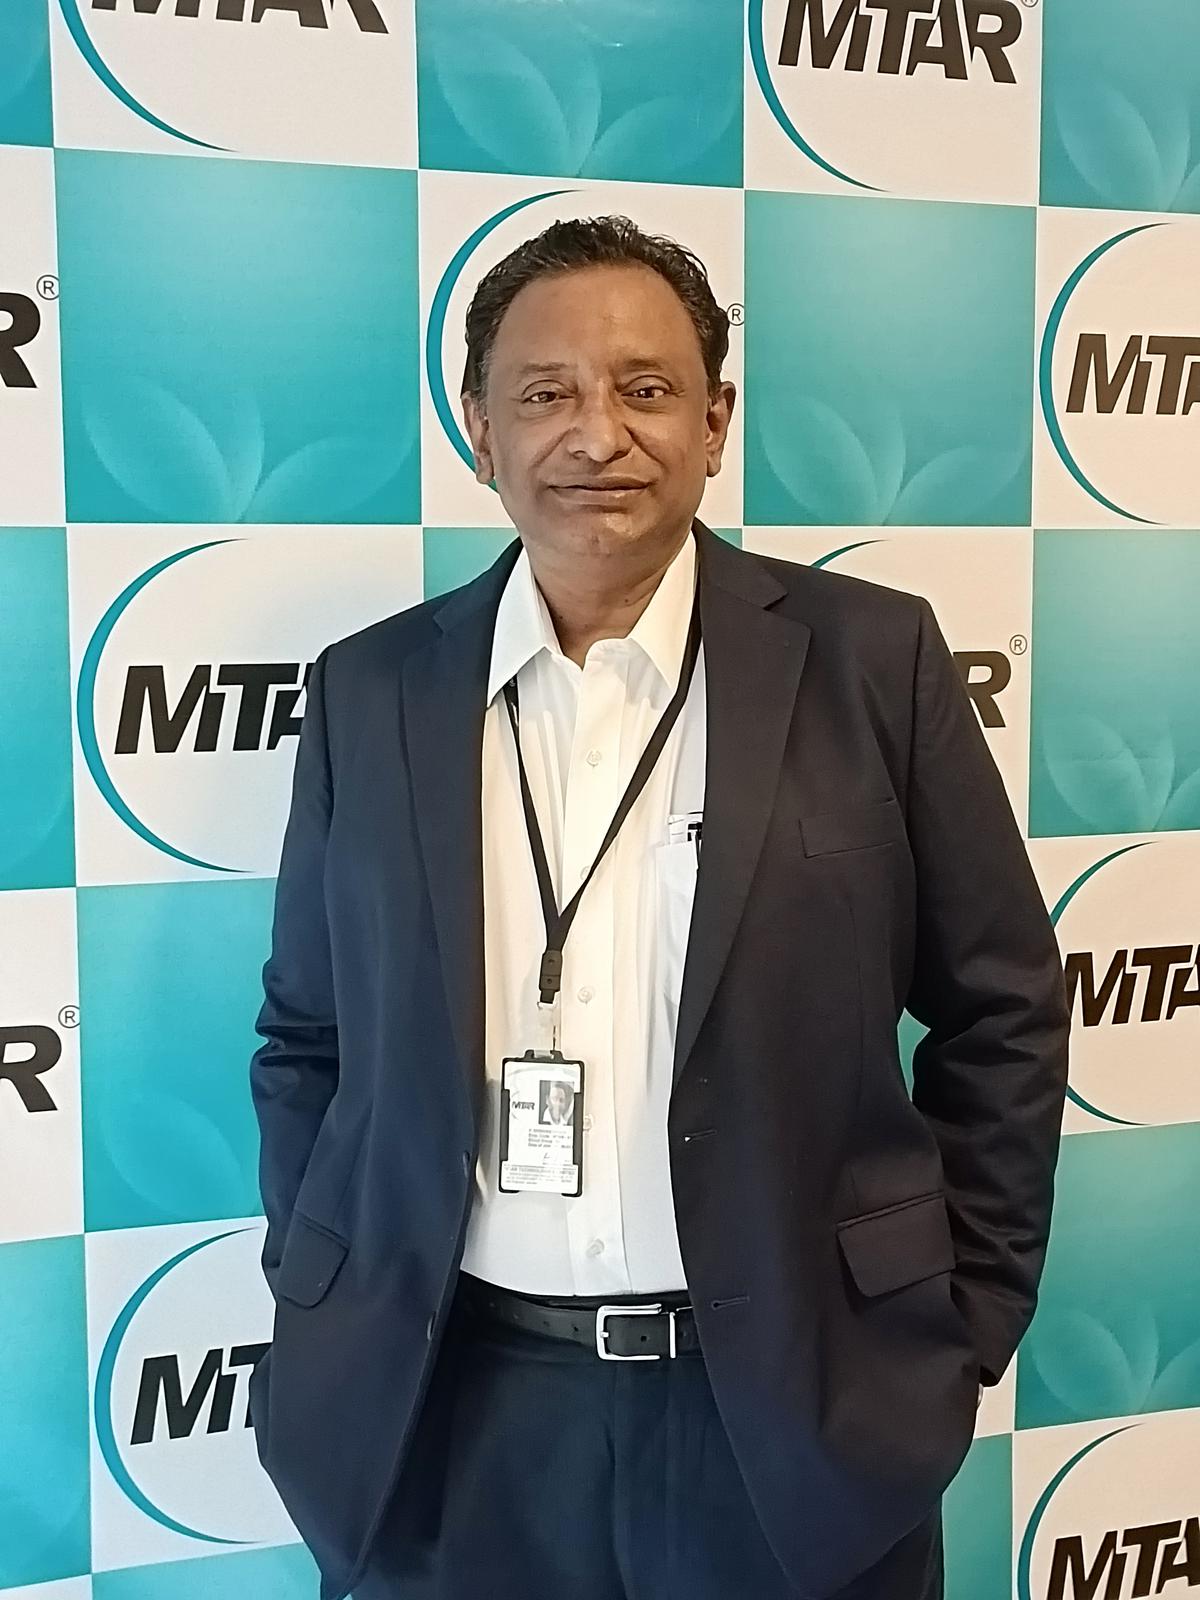 Parvat Srinivas Reddy, Managing Director and promoter of MTAR Technologies